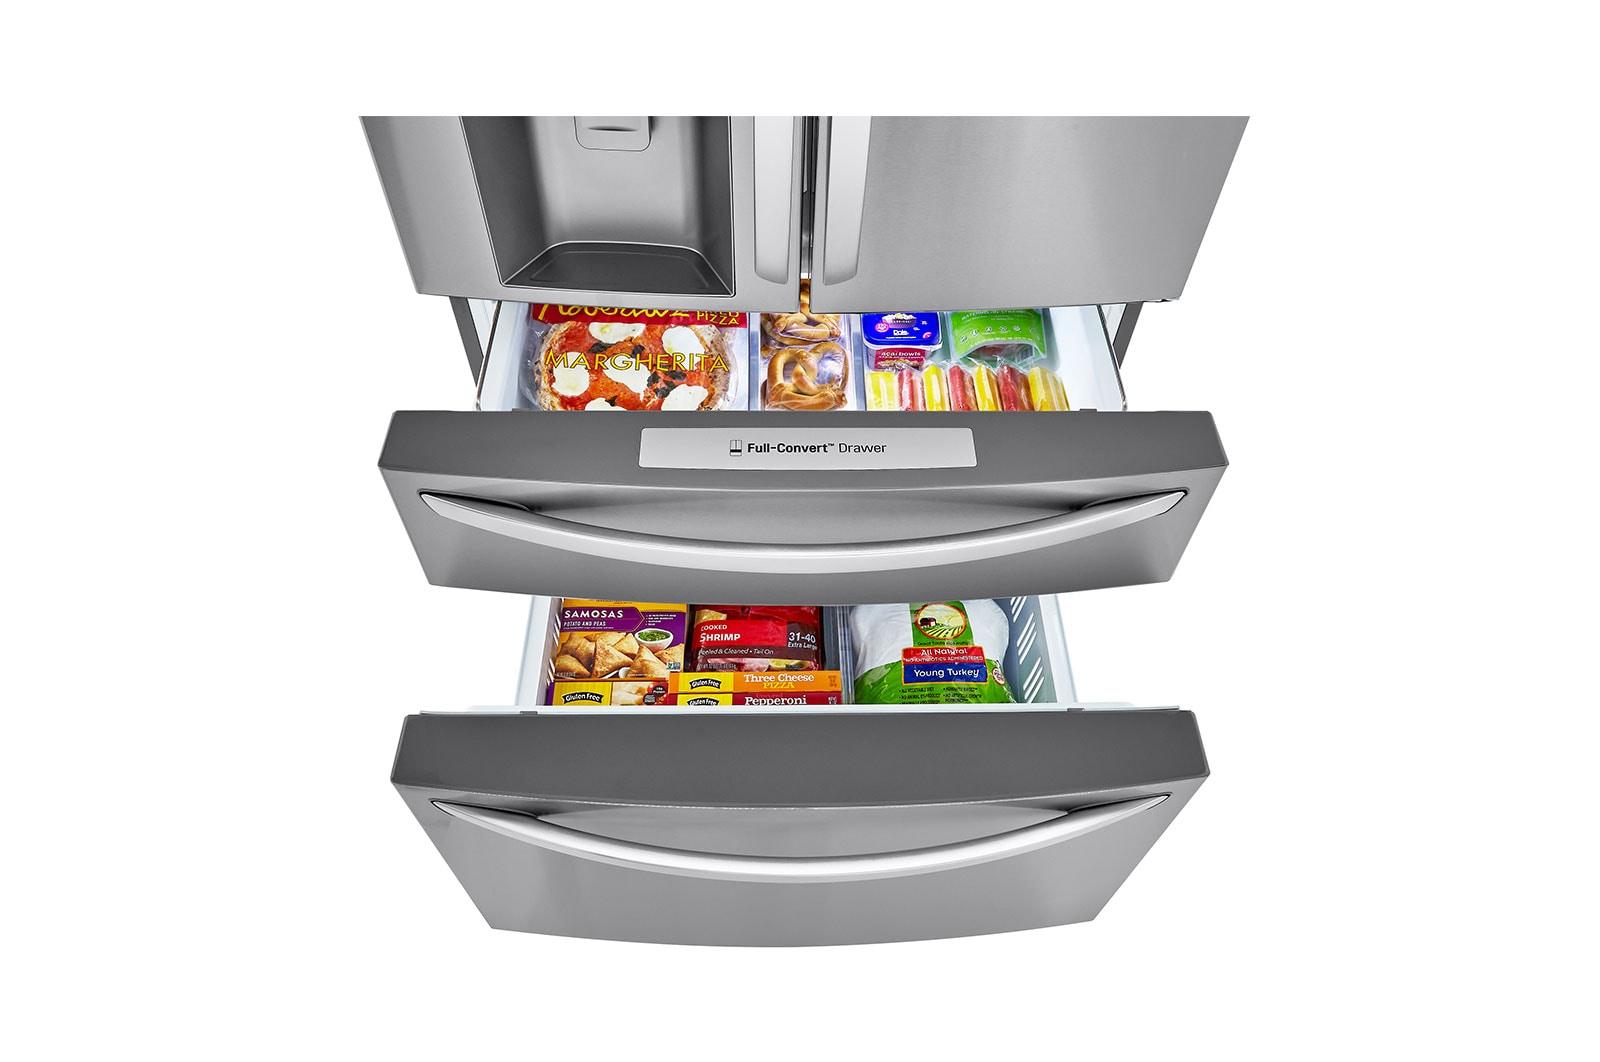 30 cu. ft. Smart Refrigerator with Craft Ice™